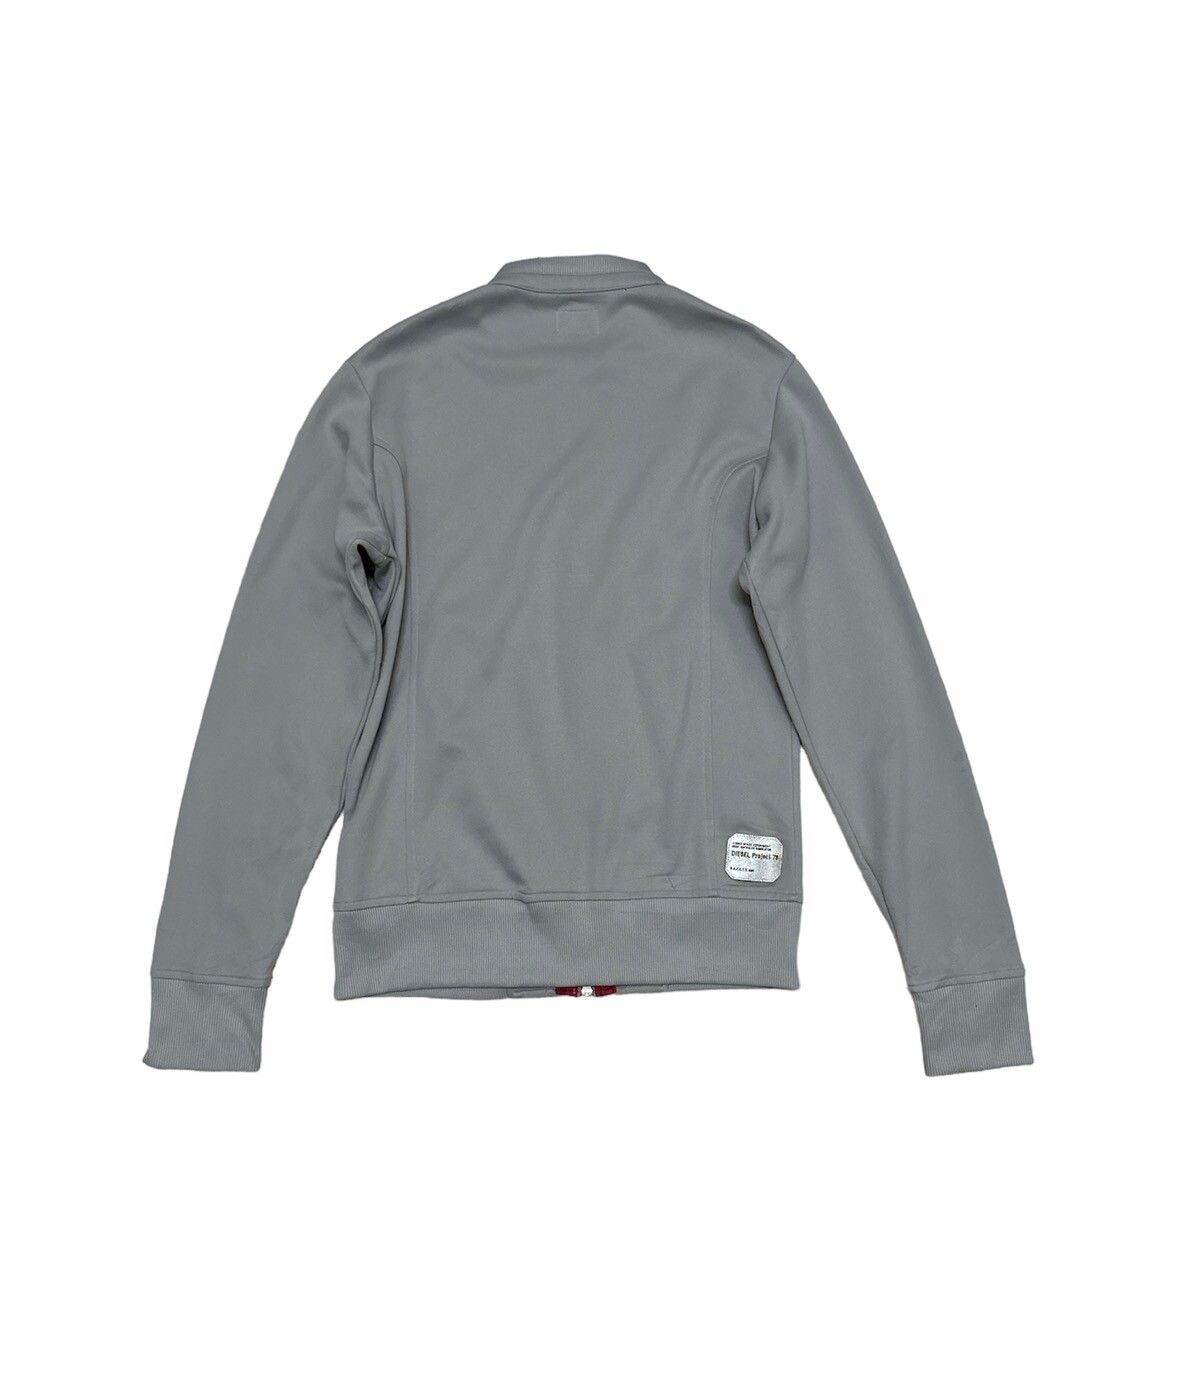 Diesel Jacket Sweater Zipper Design - 2